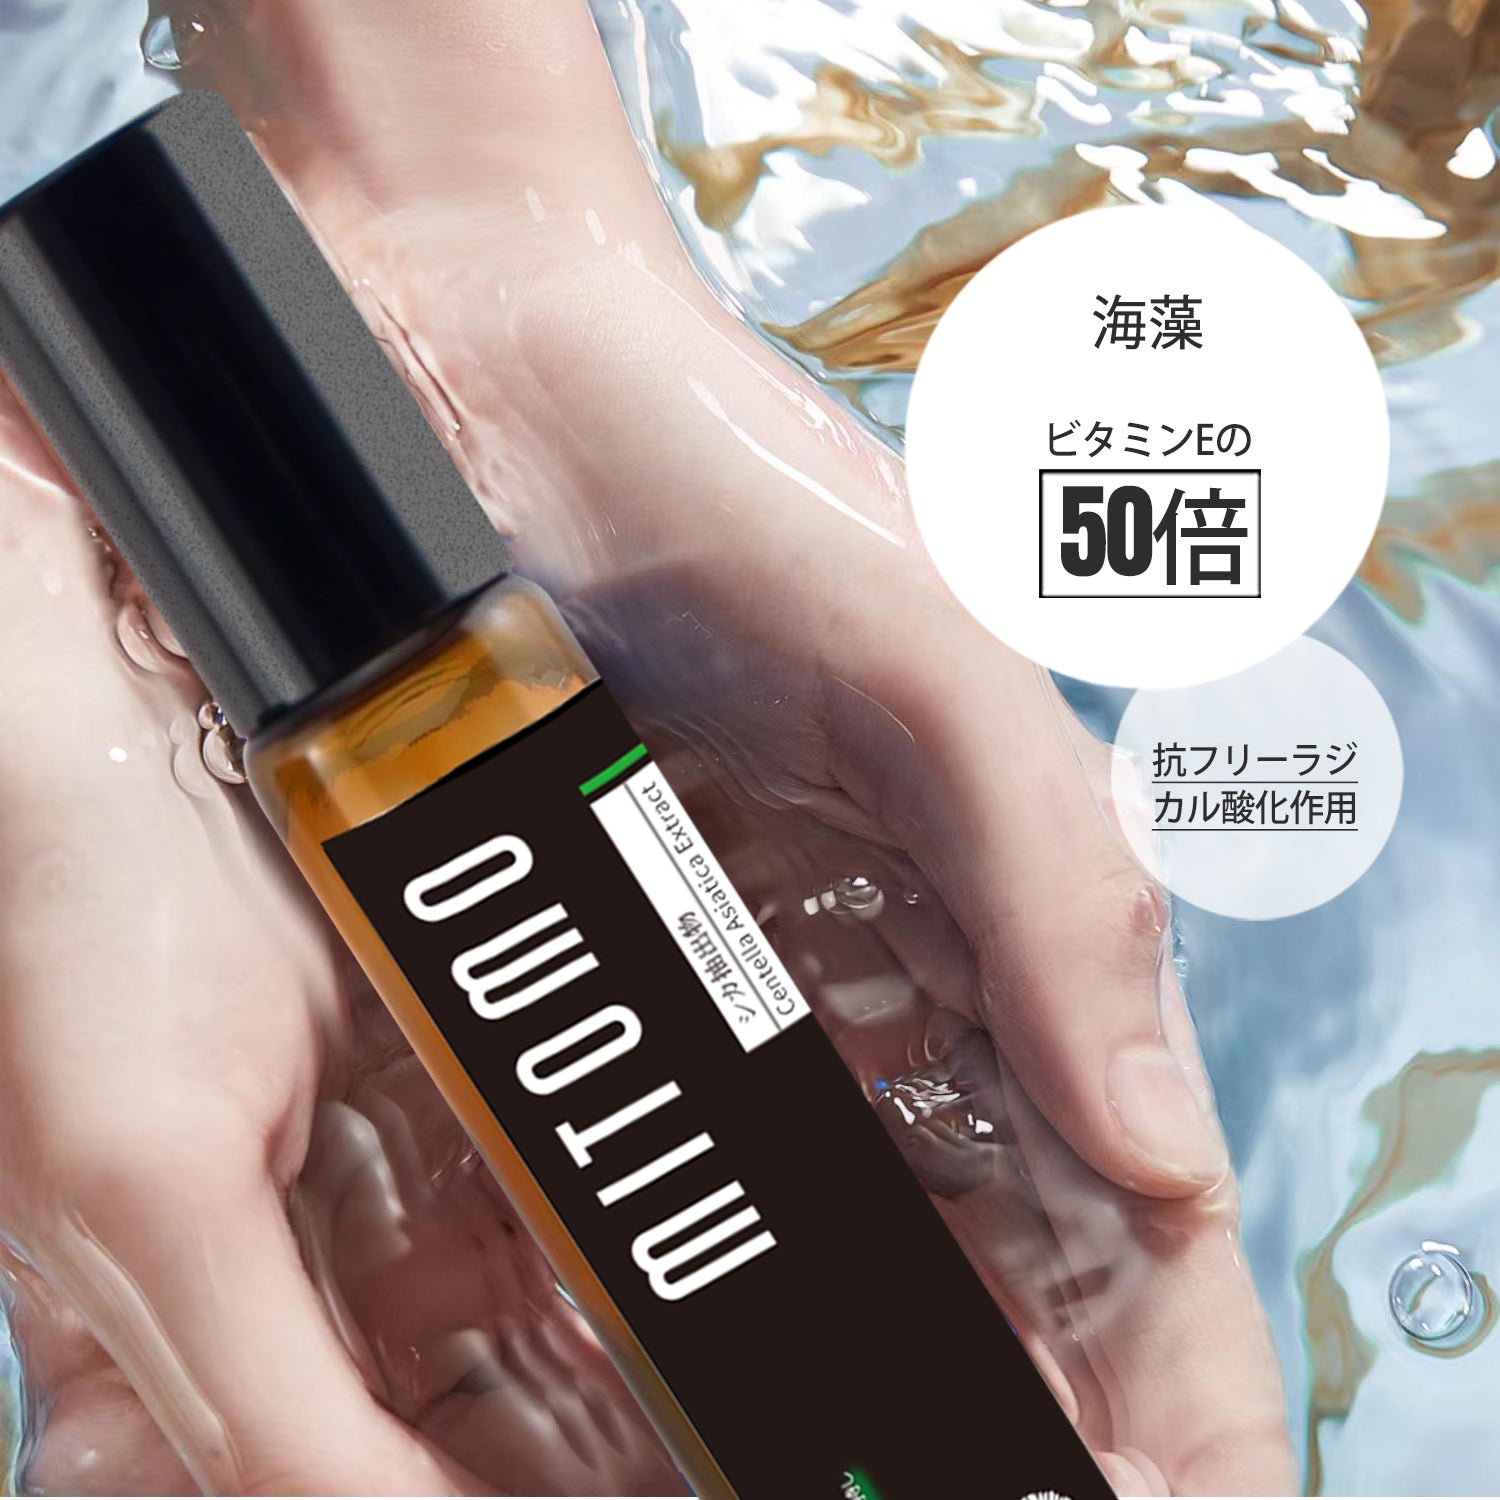 MITOMO 日本製海藻スキンケア 潤い 保湿 フアンペアボトル10mlエキス【EXSA00004-07-010】